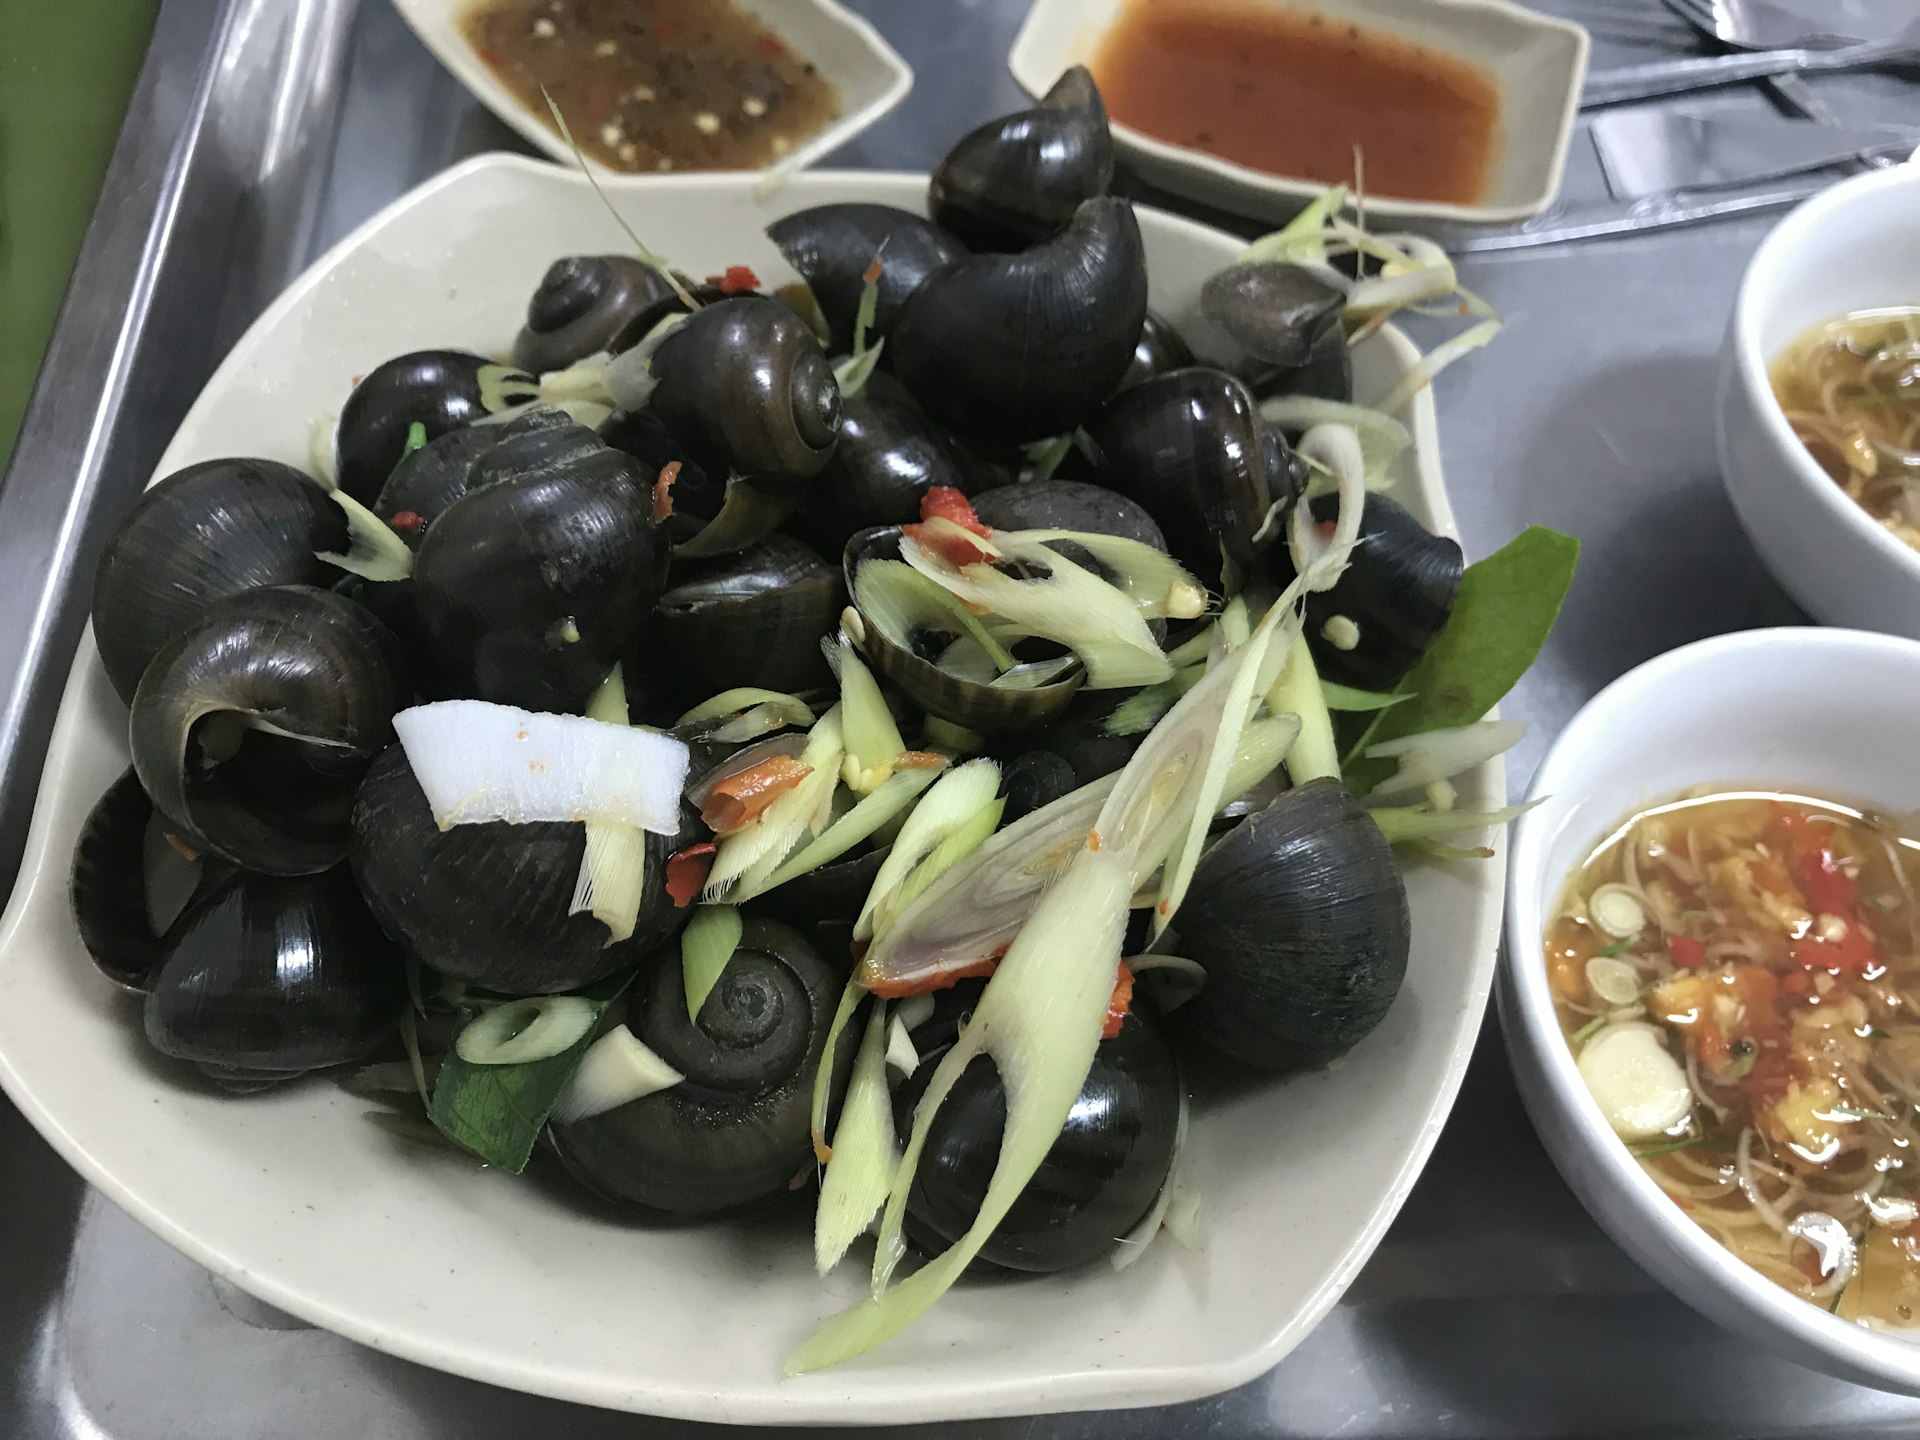 A plate of black sea snails